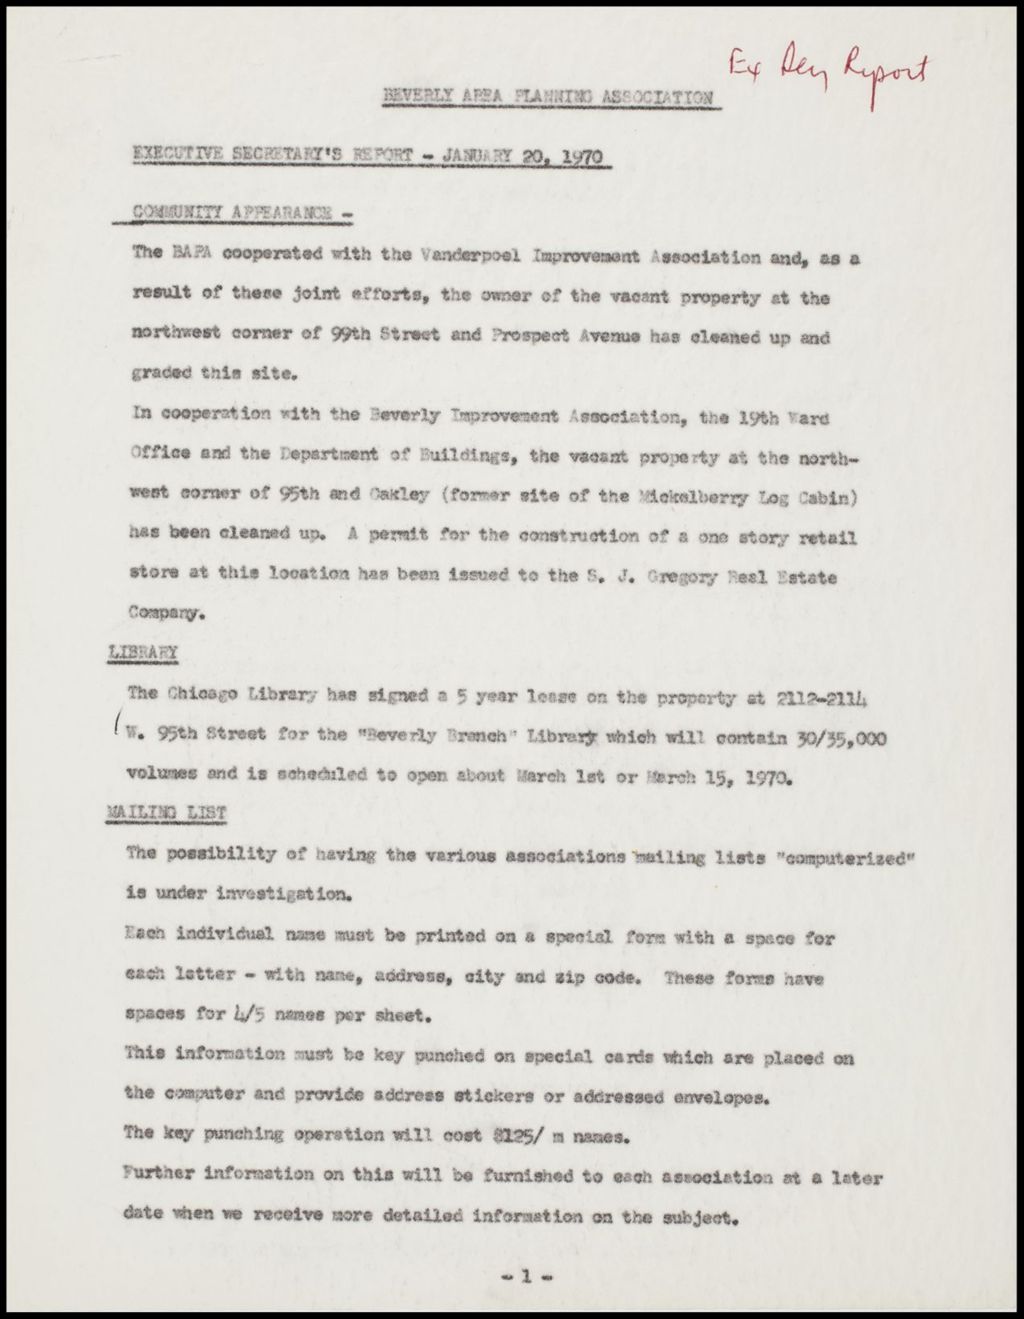 Miniature of Executive Secretary's reports, 1970 (Folder 105)